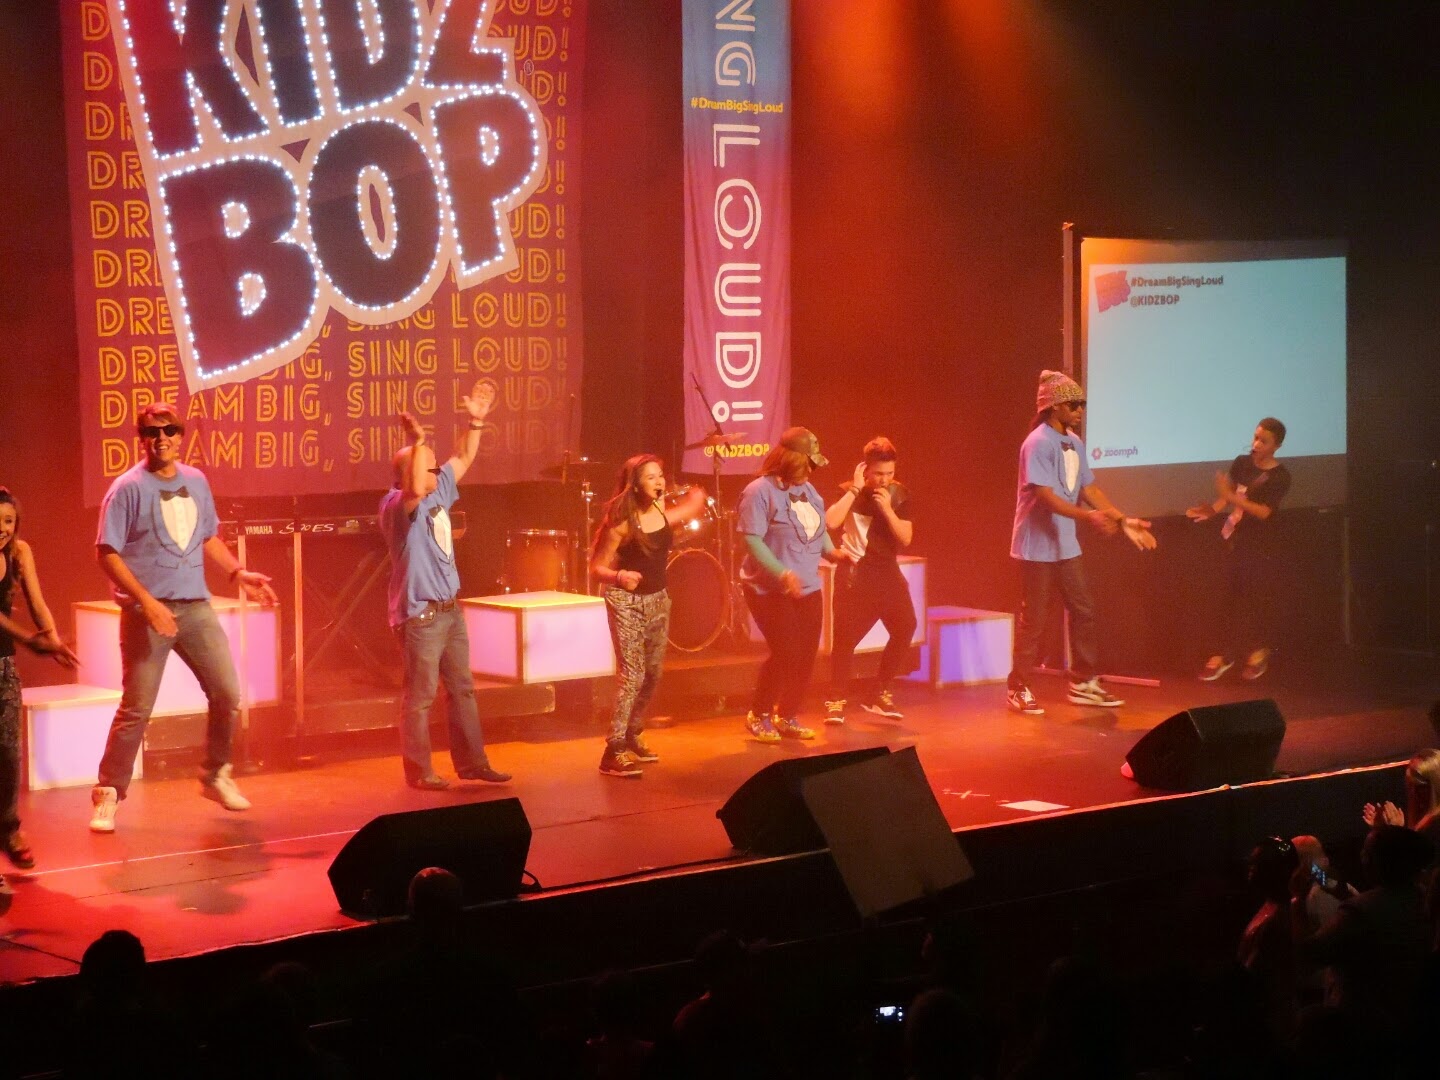 Kidz Bop Kids Concert Recap Review #DreamBigSingLoud via www.productreviewmom.com